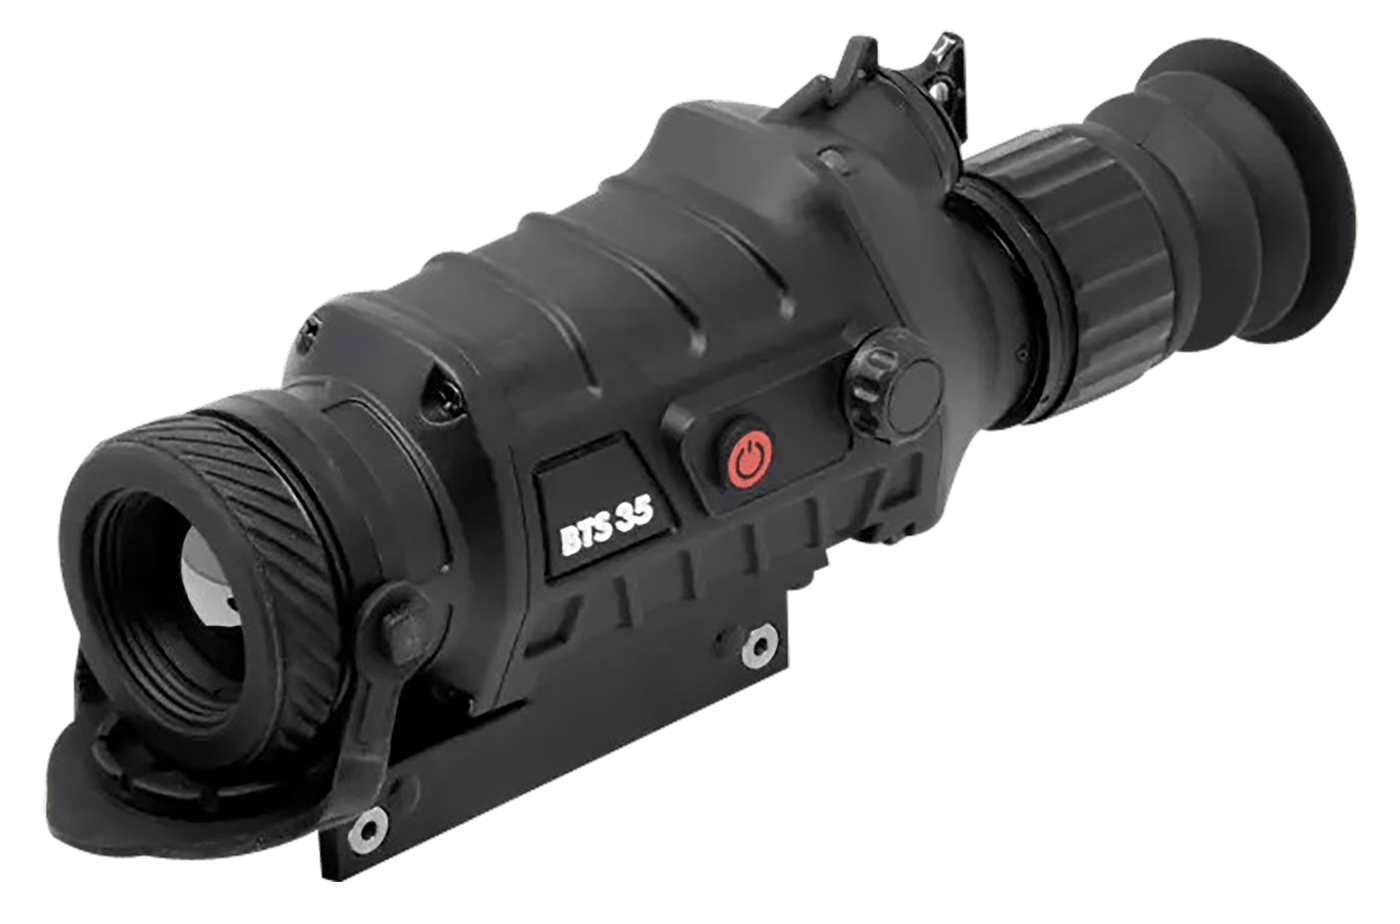 Burris Burris Thermal Riflescope Bts35 Blk Optics